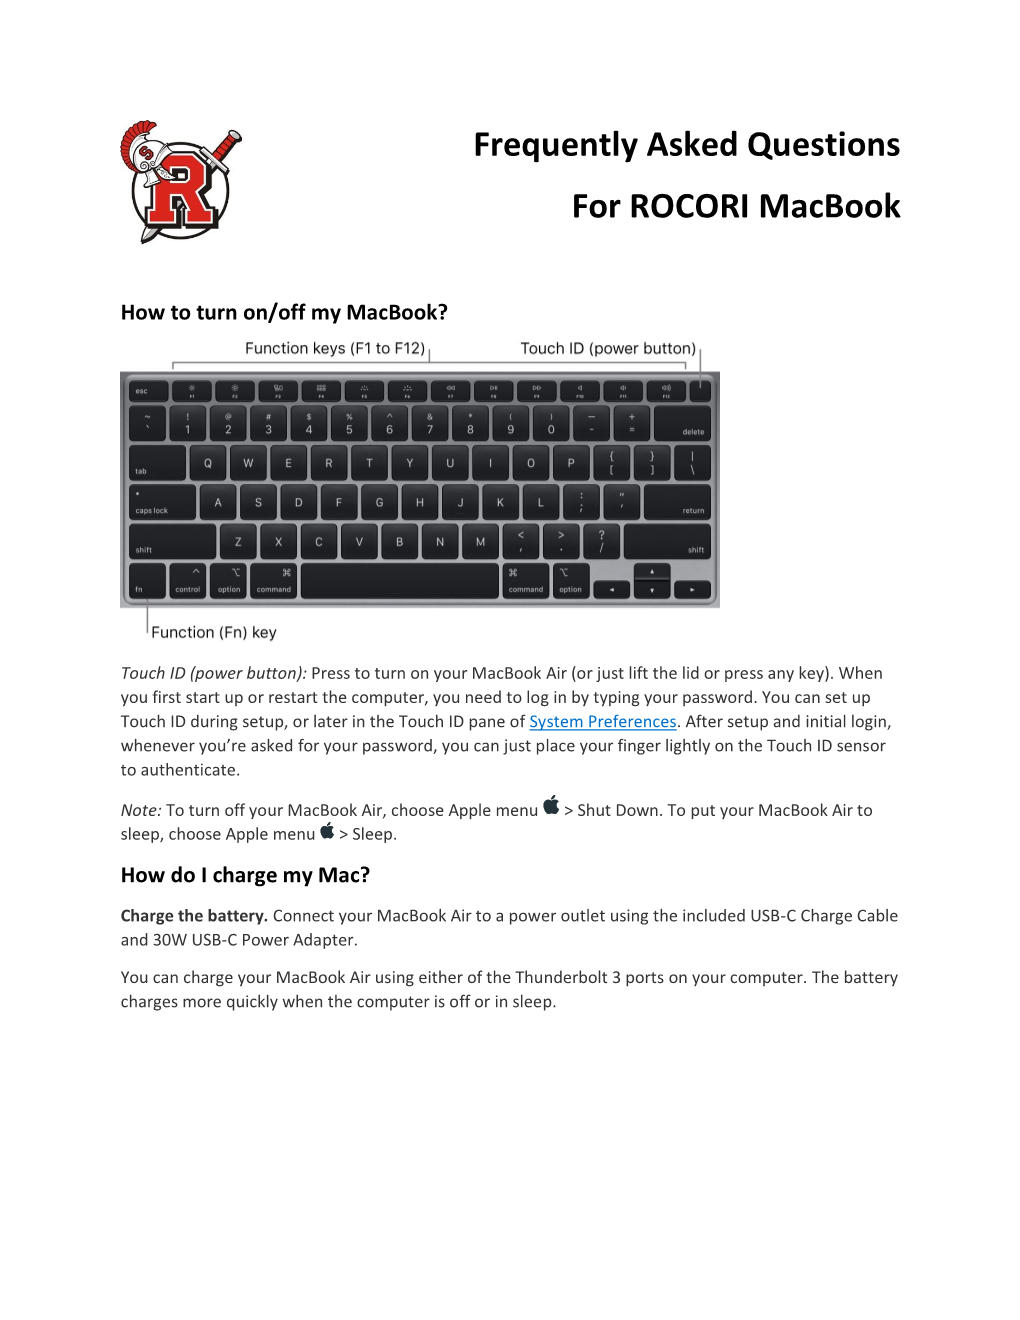 Faqs for ROCORI Macbooks